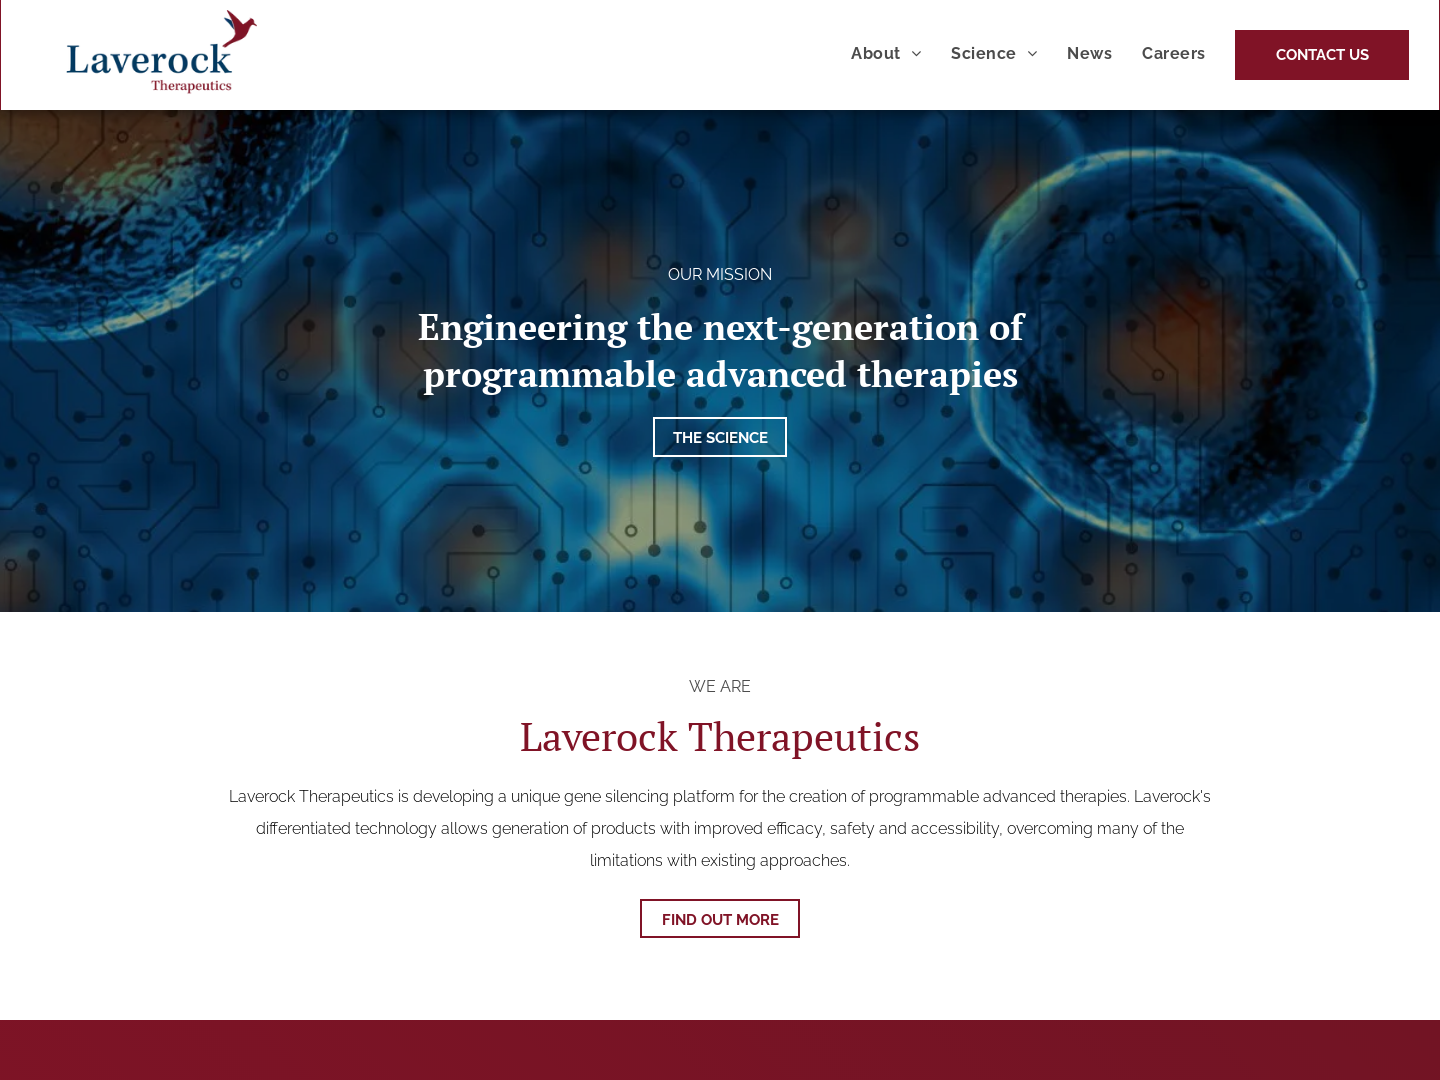 "Laverock Therapeutics Raises £13.5M for Gene Silencing Platform"